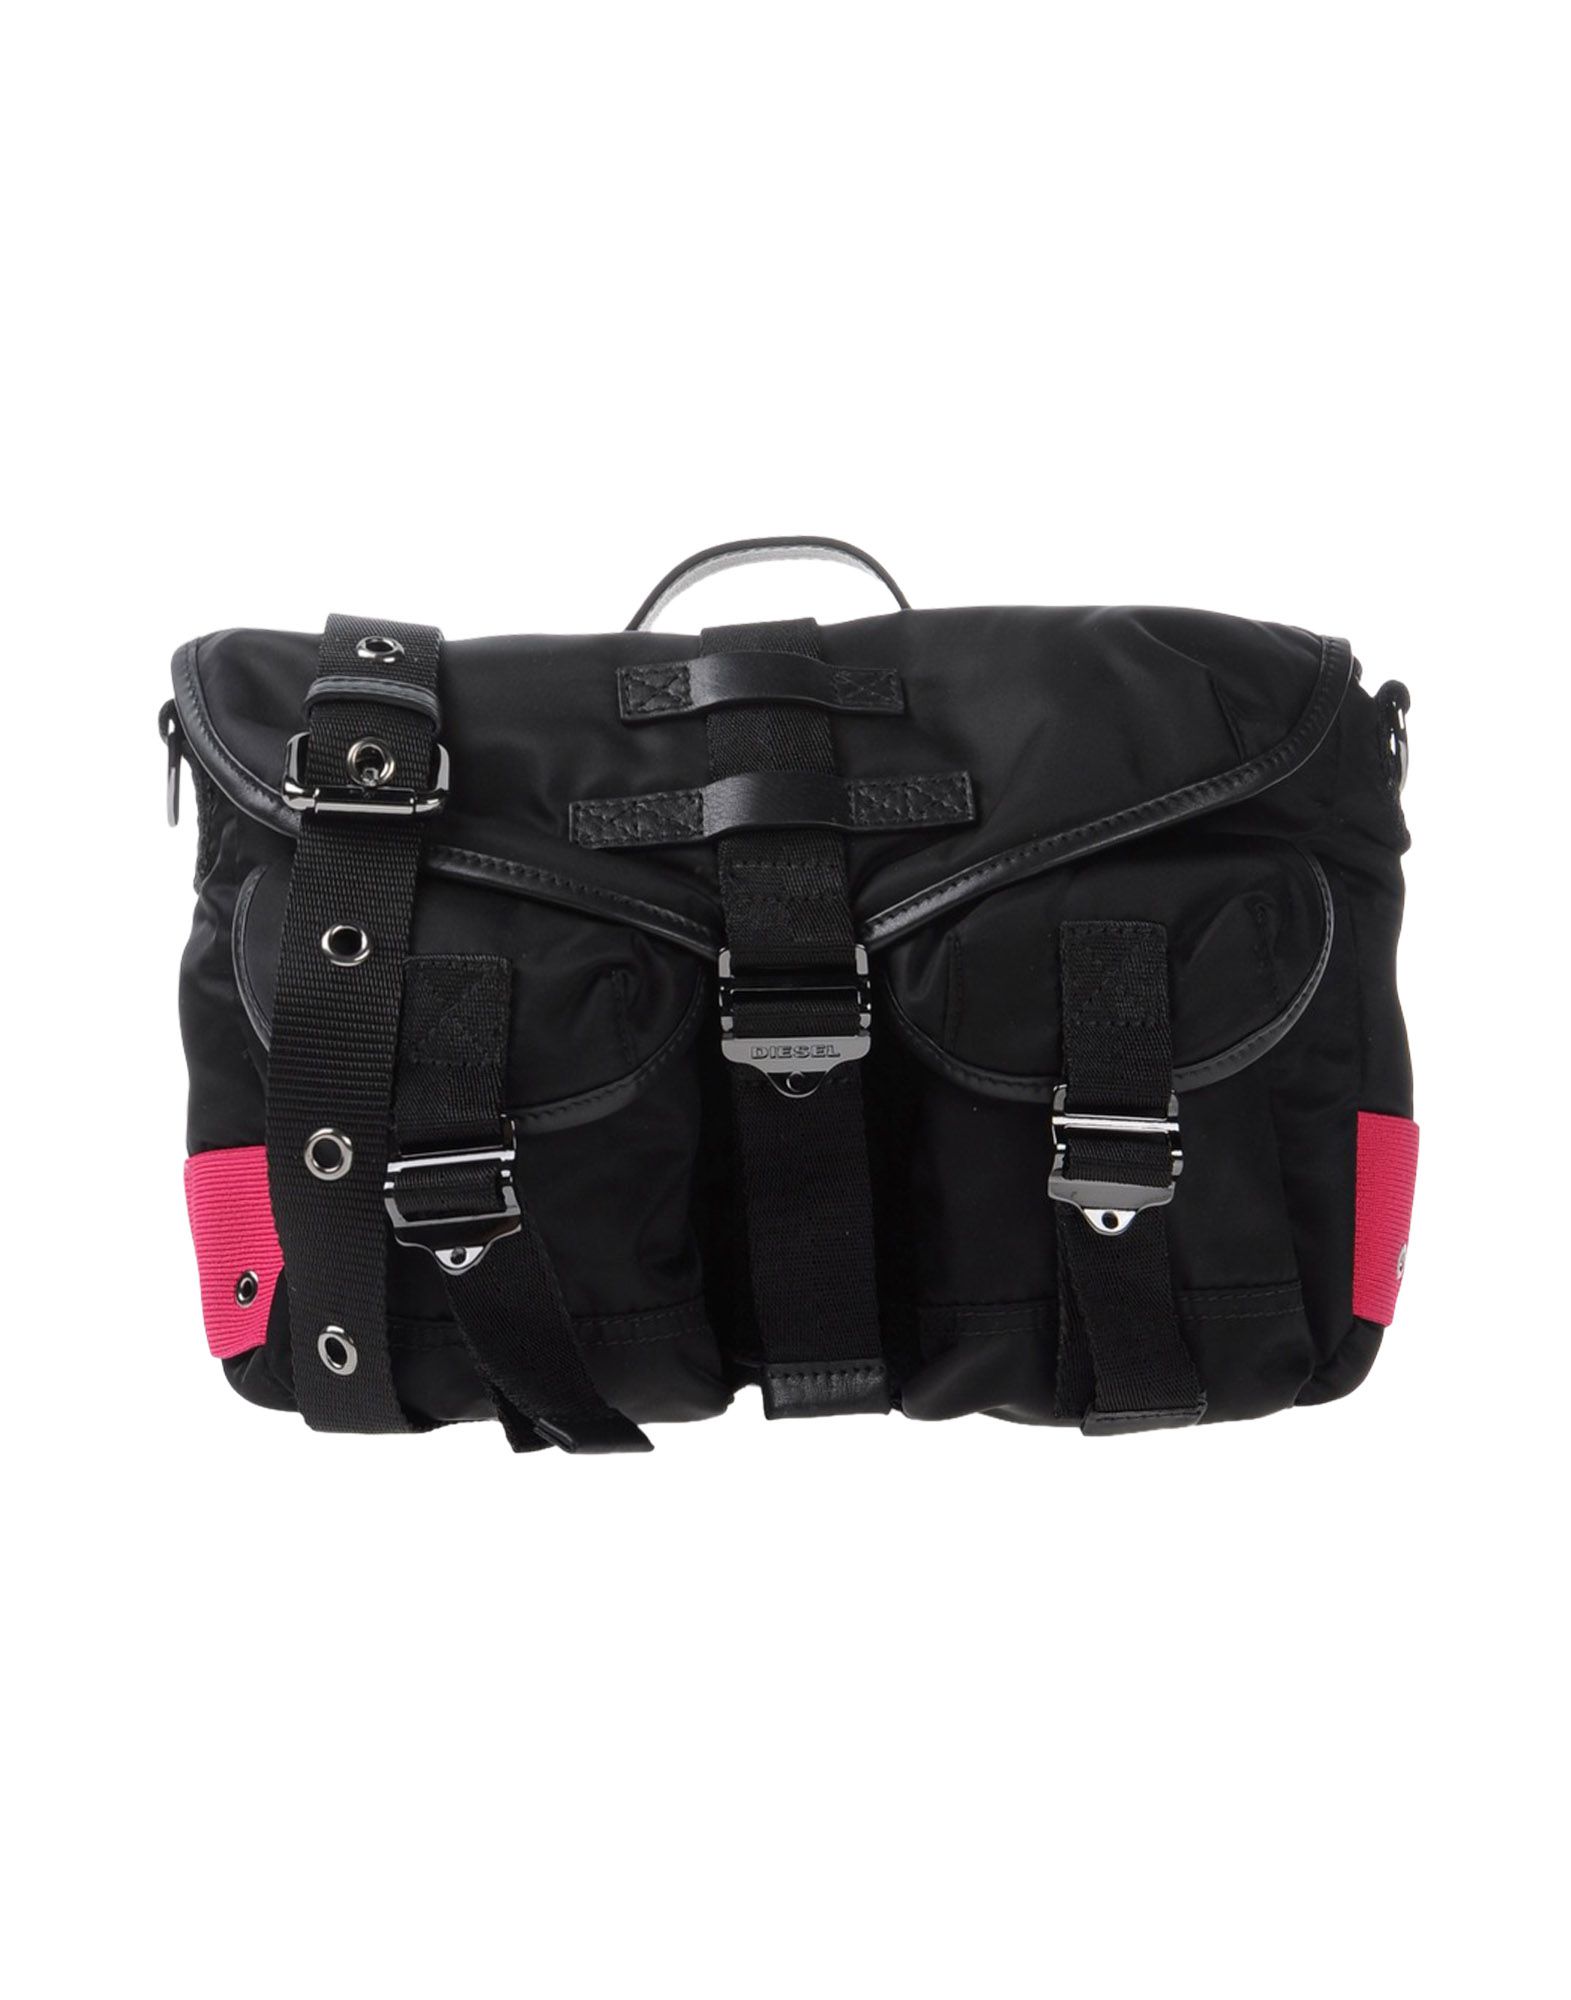 Diesel Handbags - Totes - Purses - Clutches - Bags